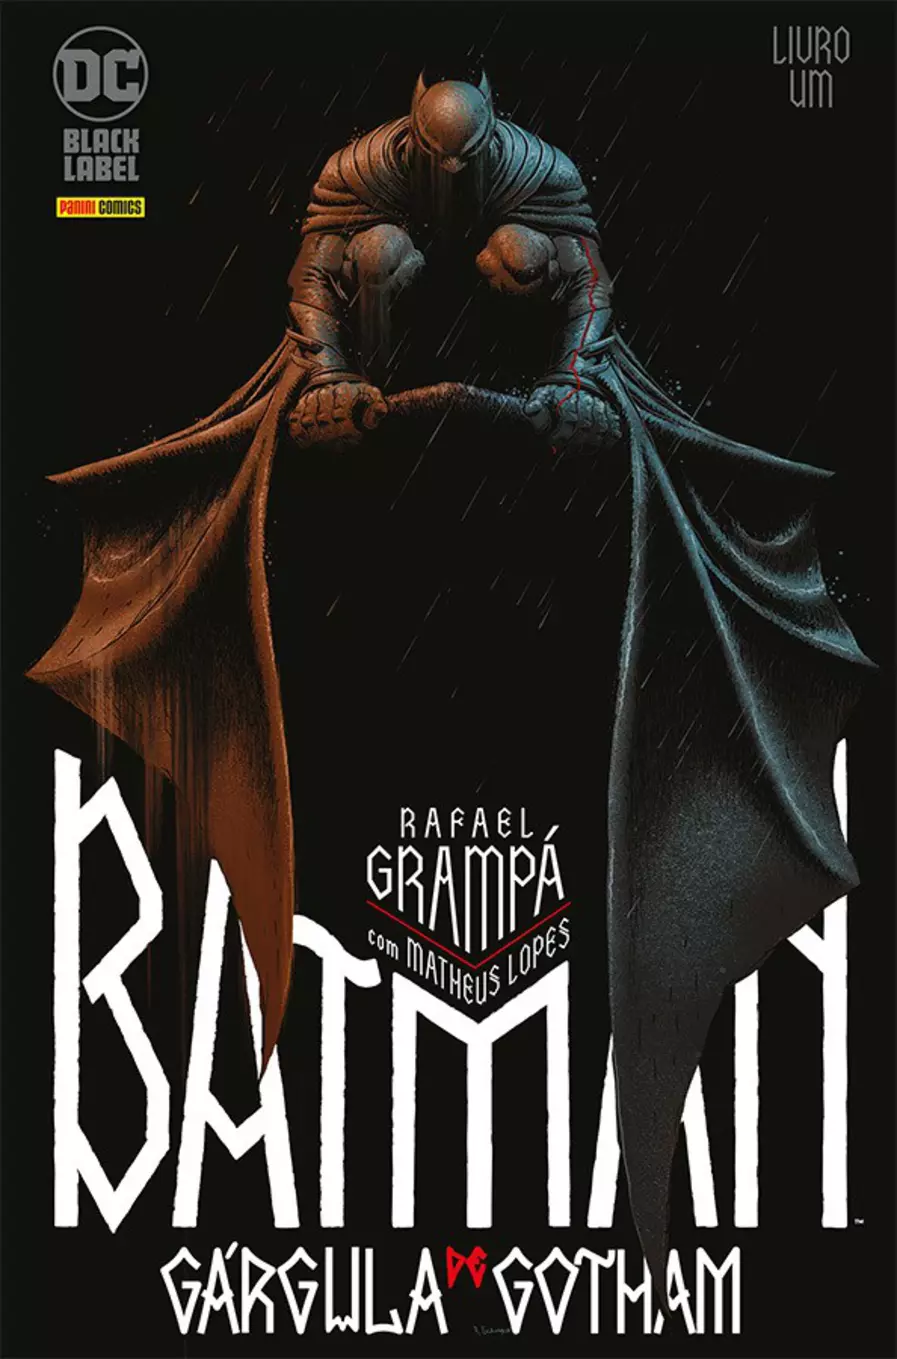 Batman 4ª Série - n° 20/Panini